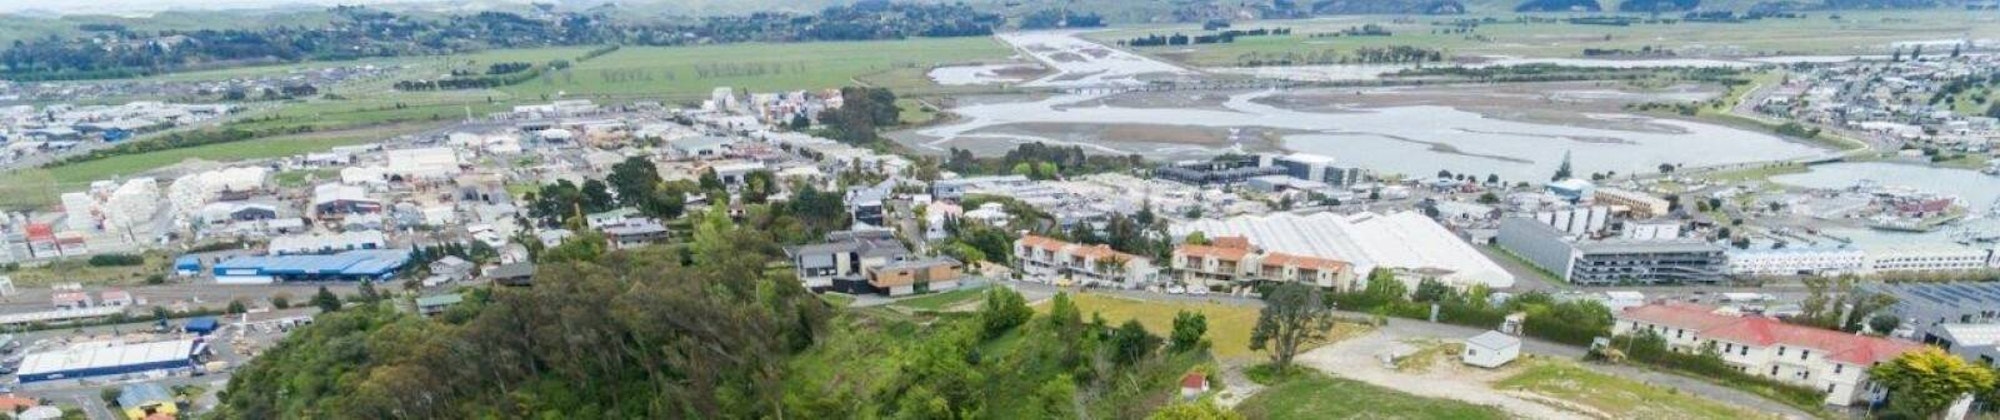 New drinking water reservoir NCC | Case Study | TPG NZ